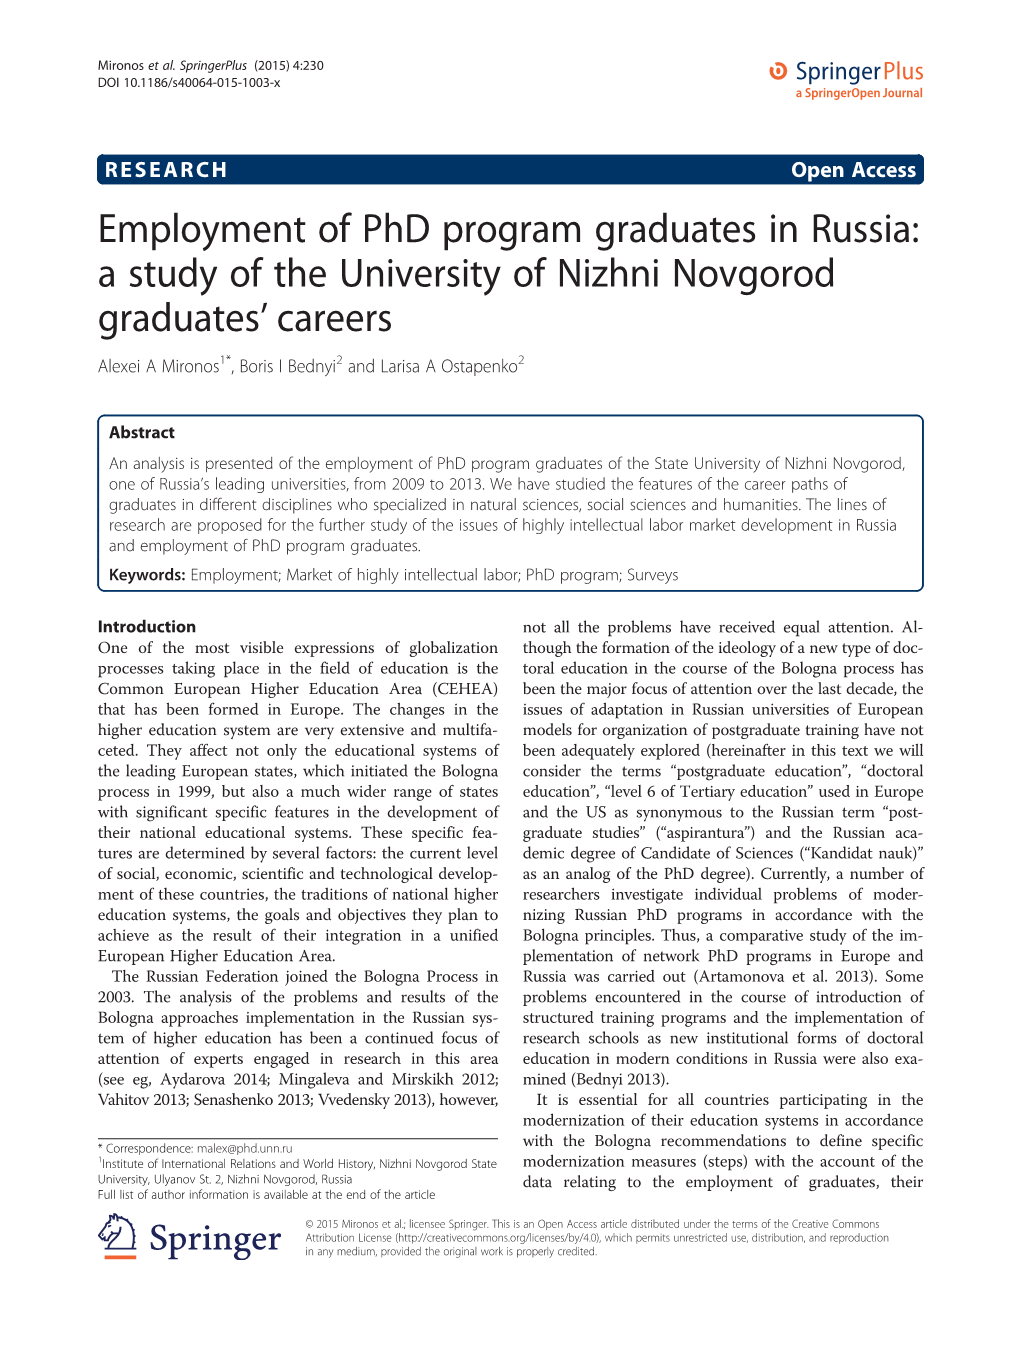 Employment of Phd Program Graduates in Russia